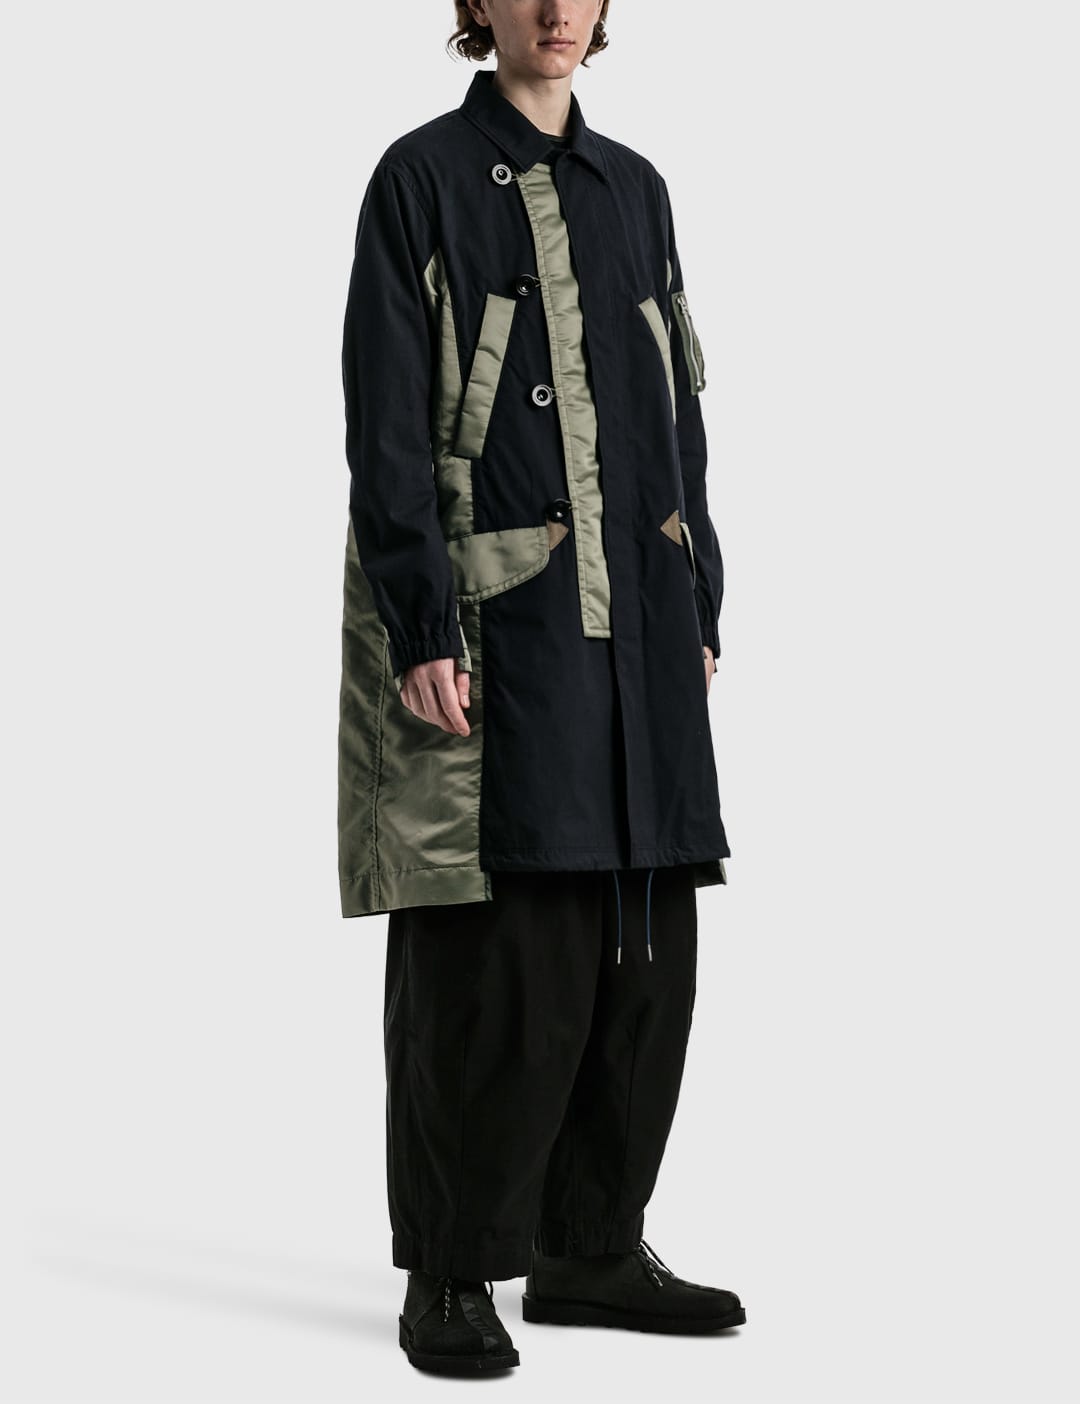 Sacai - Military Coat | HBX - Globally Curated Fashion and